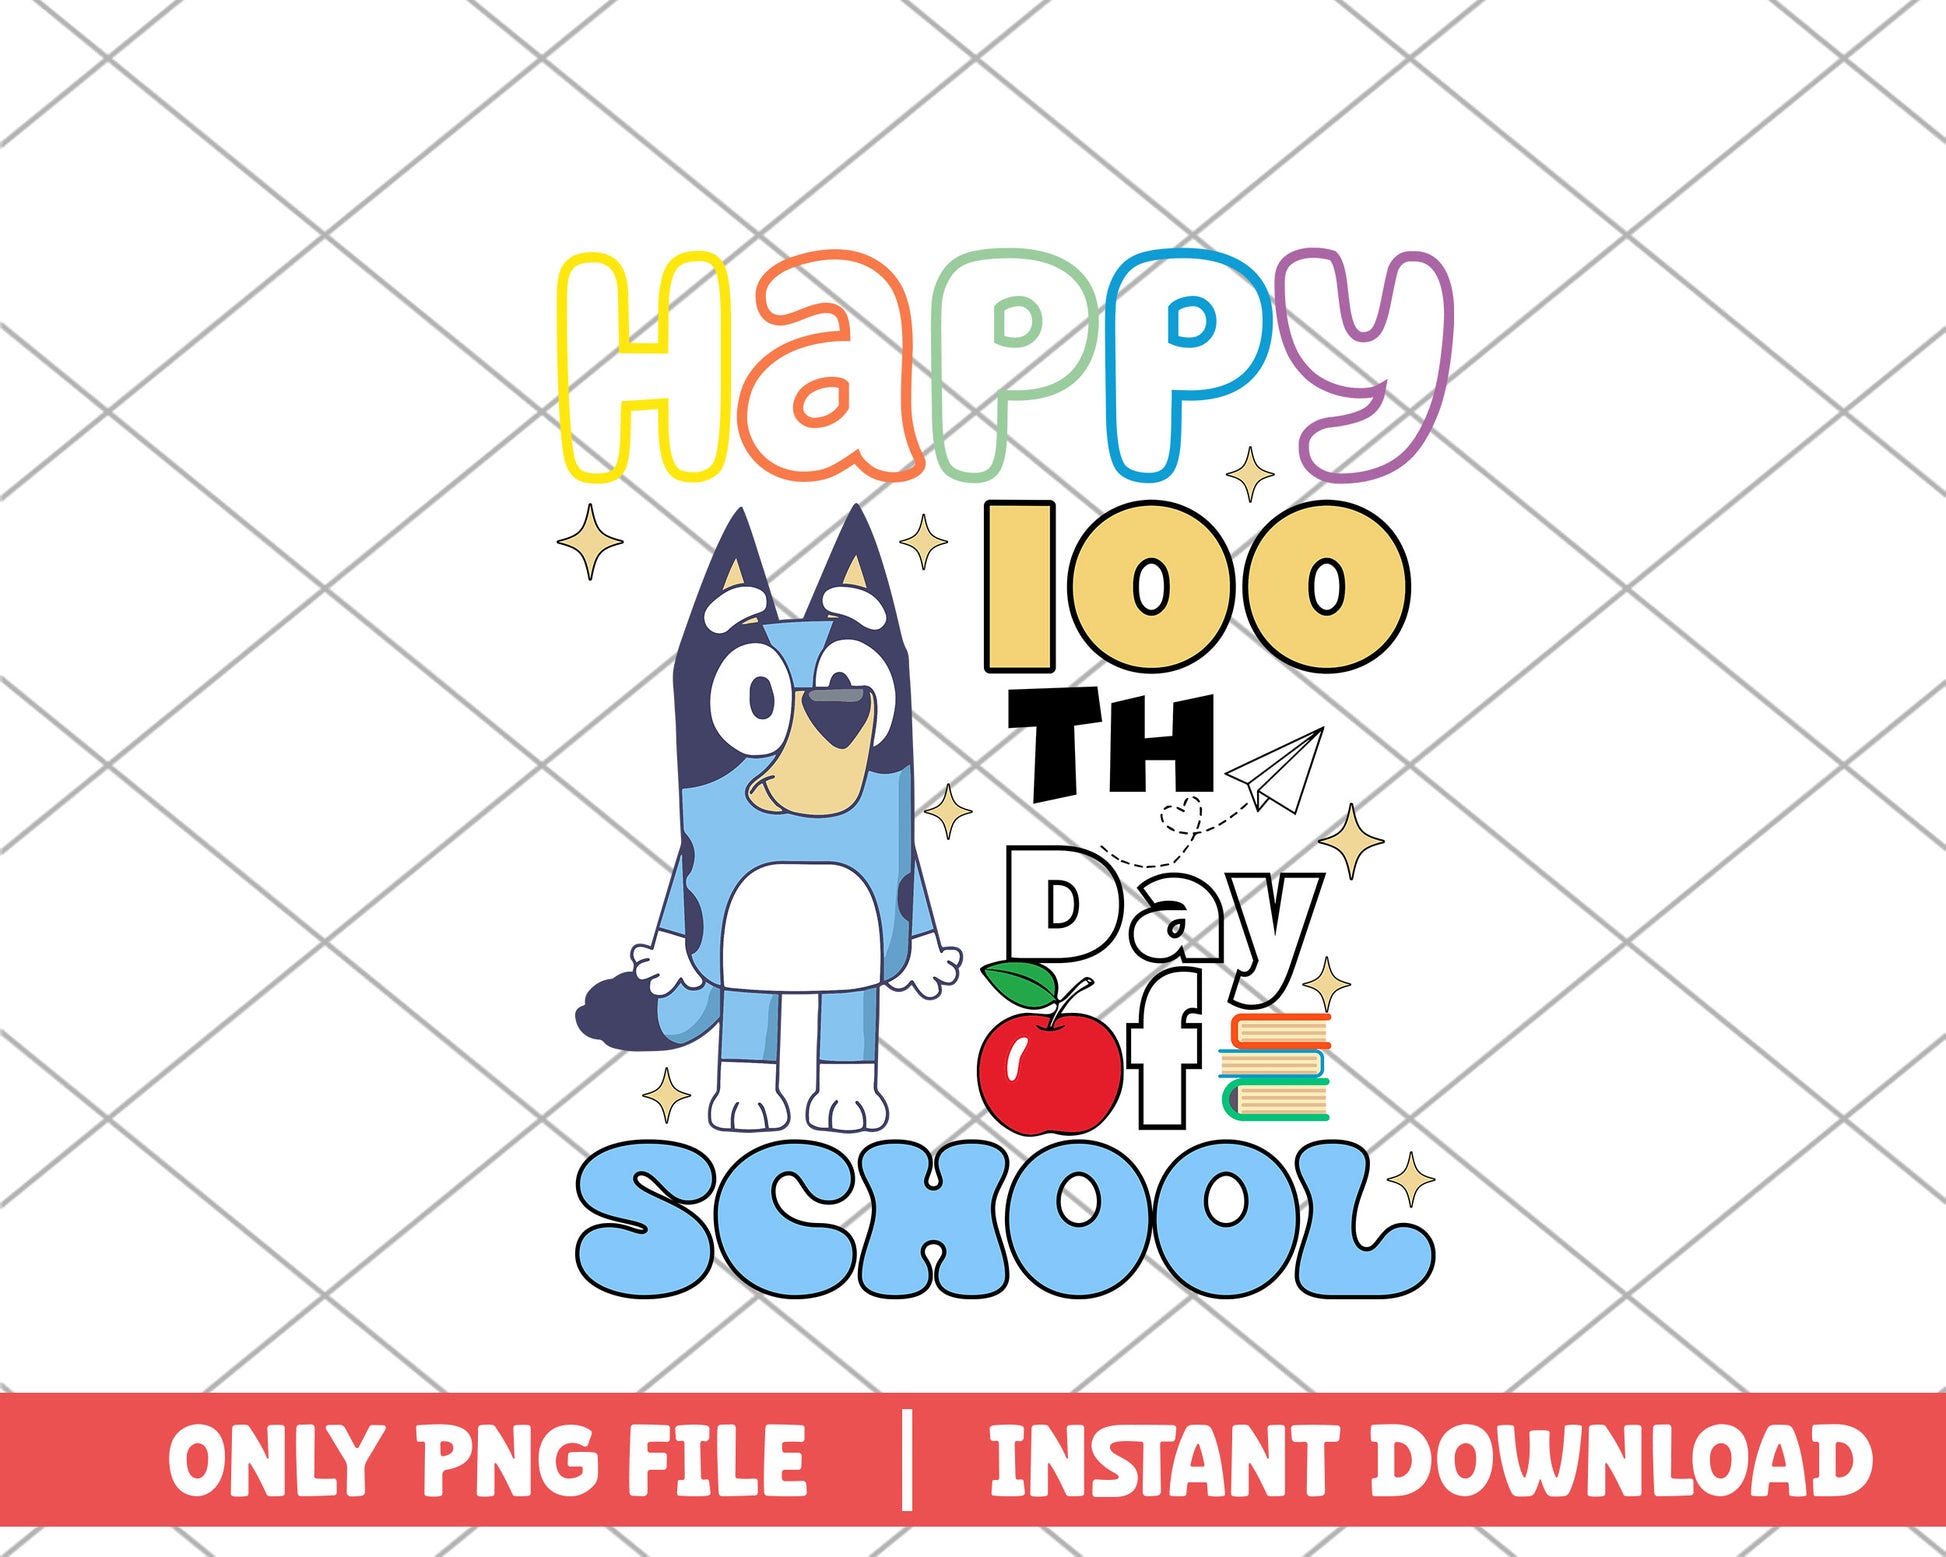 Bluey happy 100th day of school cartoon png